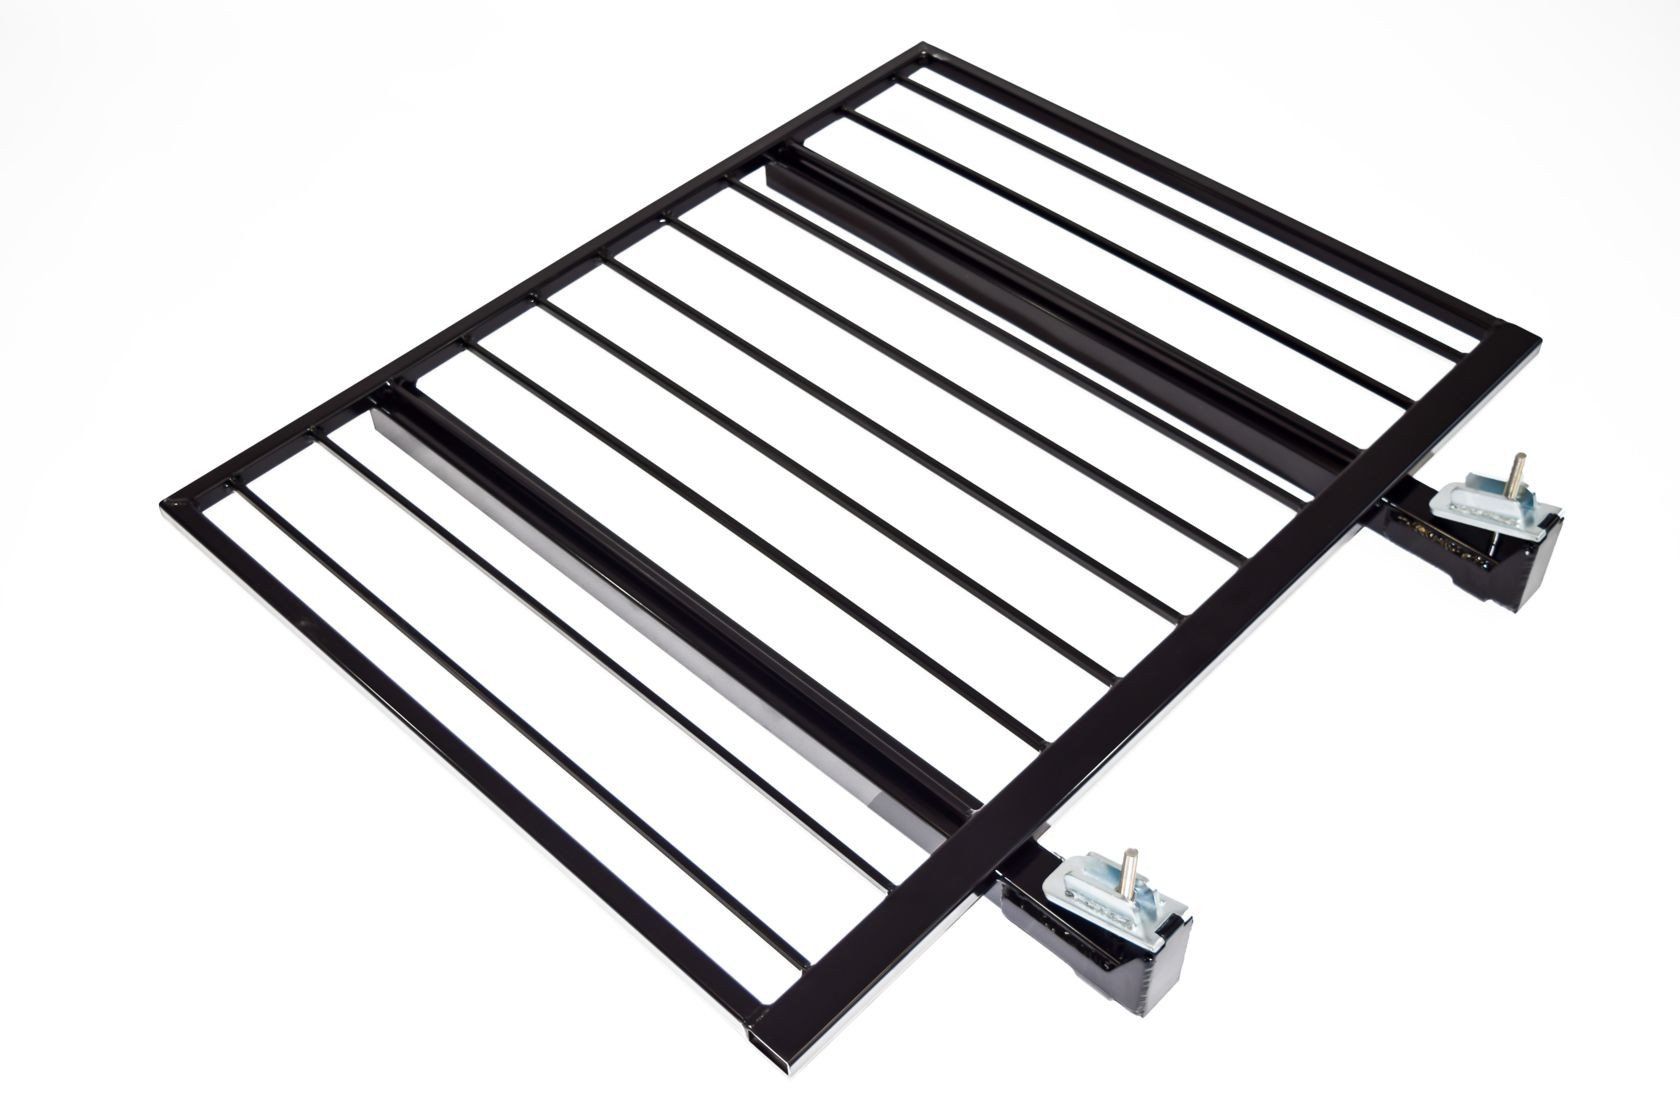 Aluminum Guardrail Frame (Code compliant for public use) Black Finish 4'x36